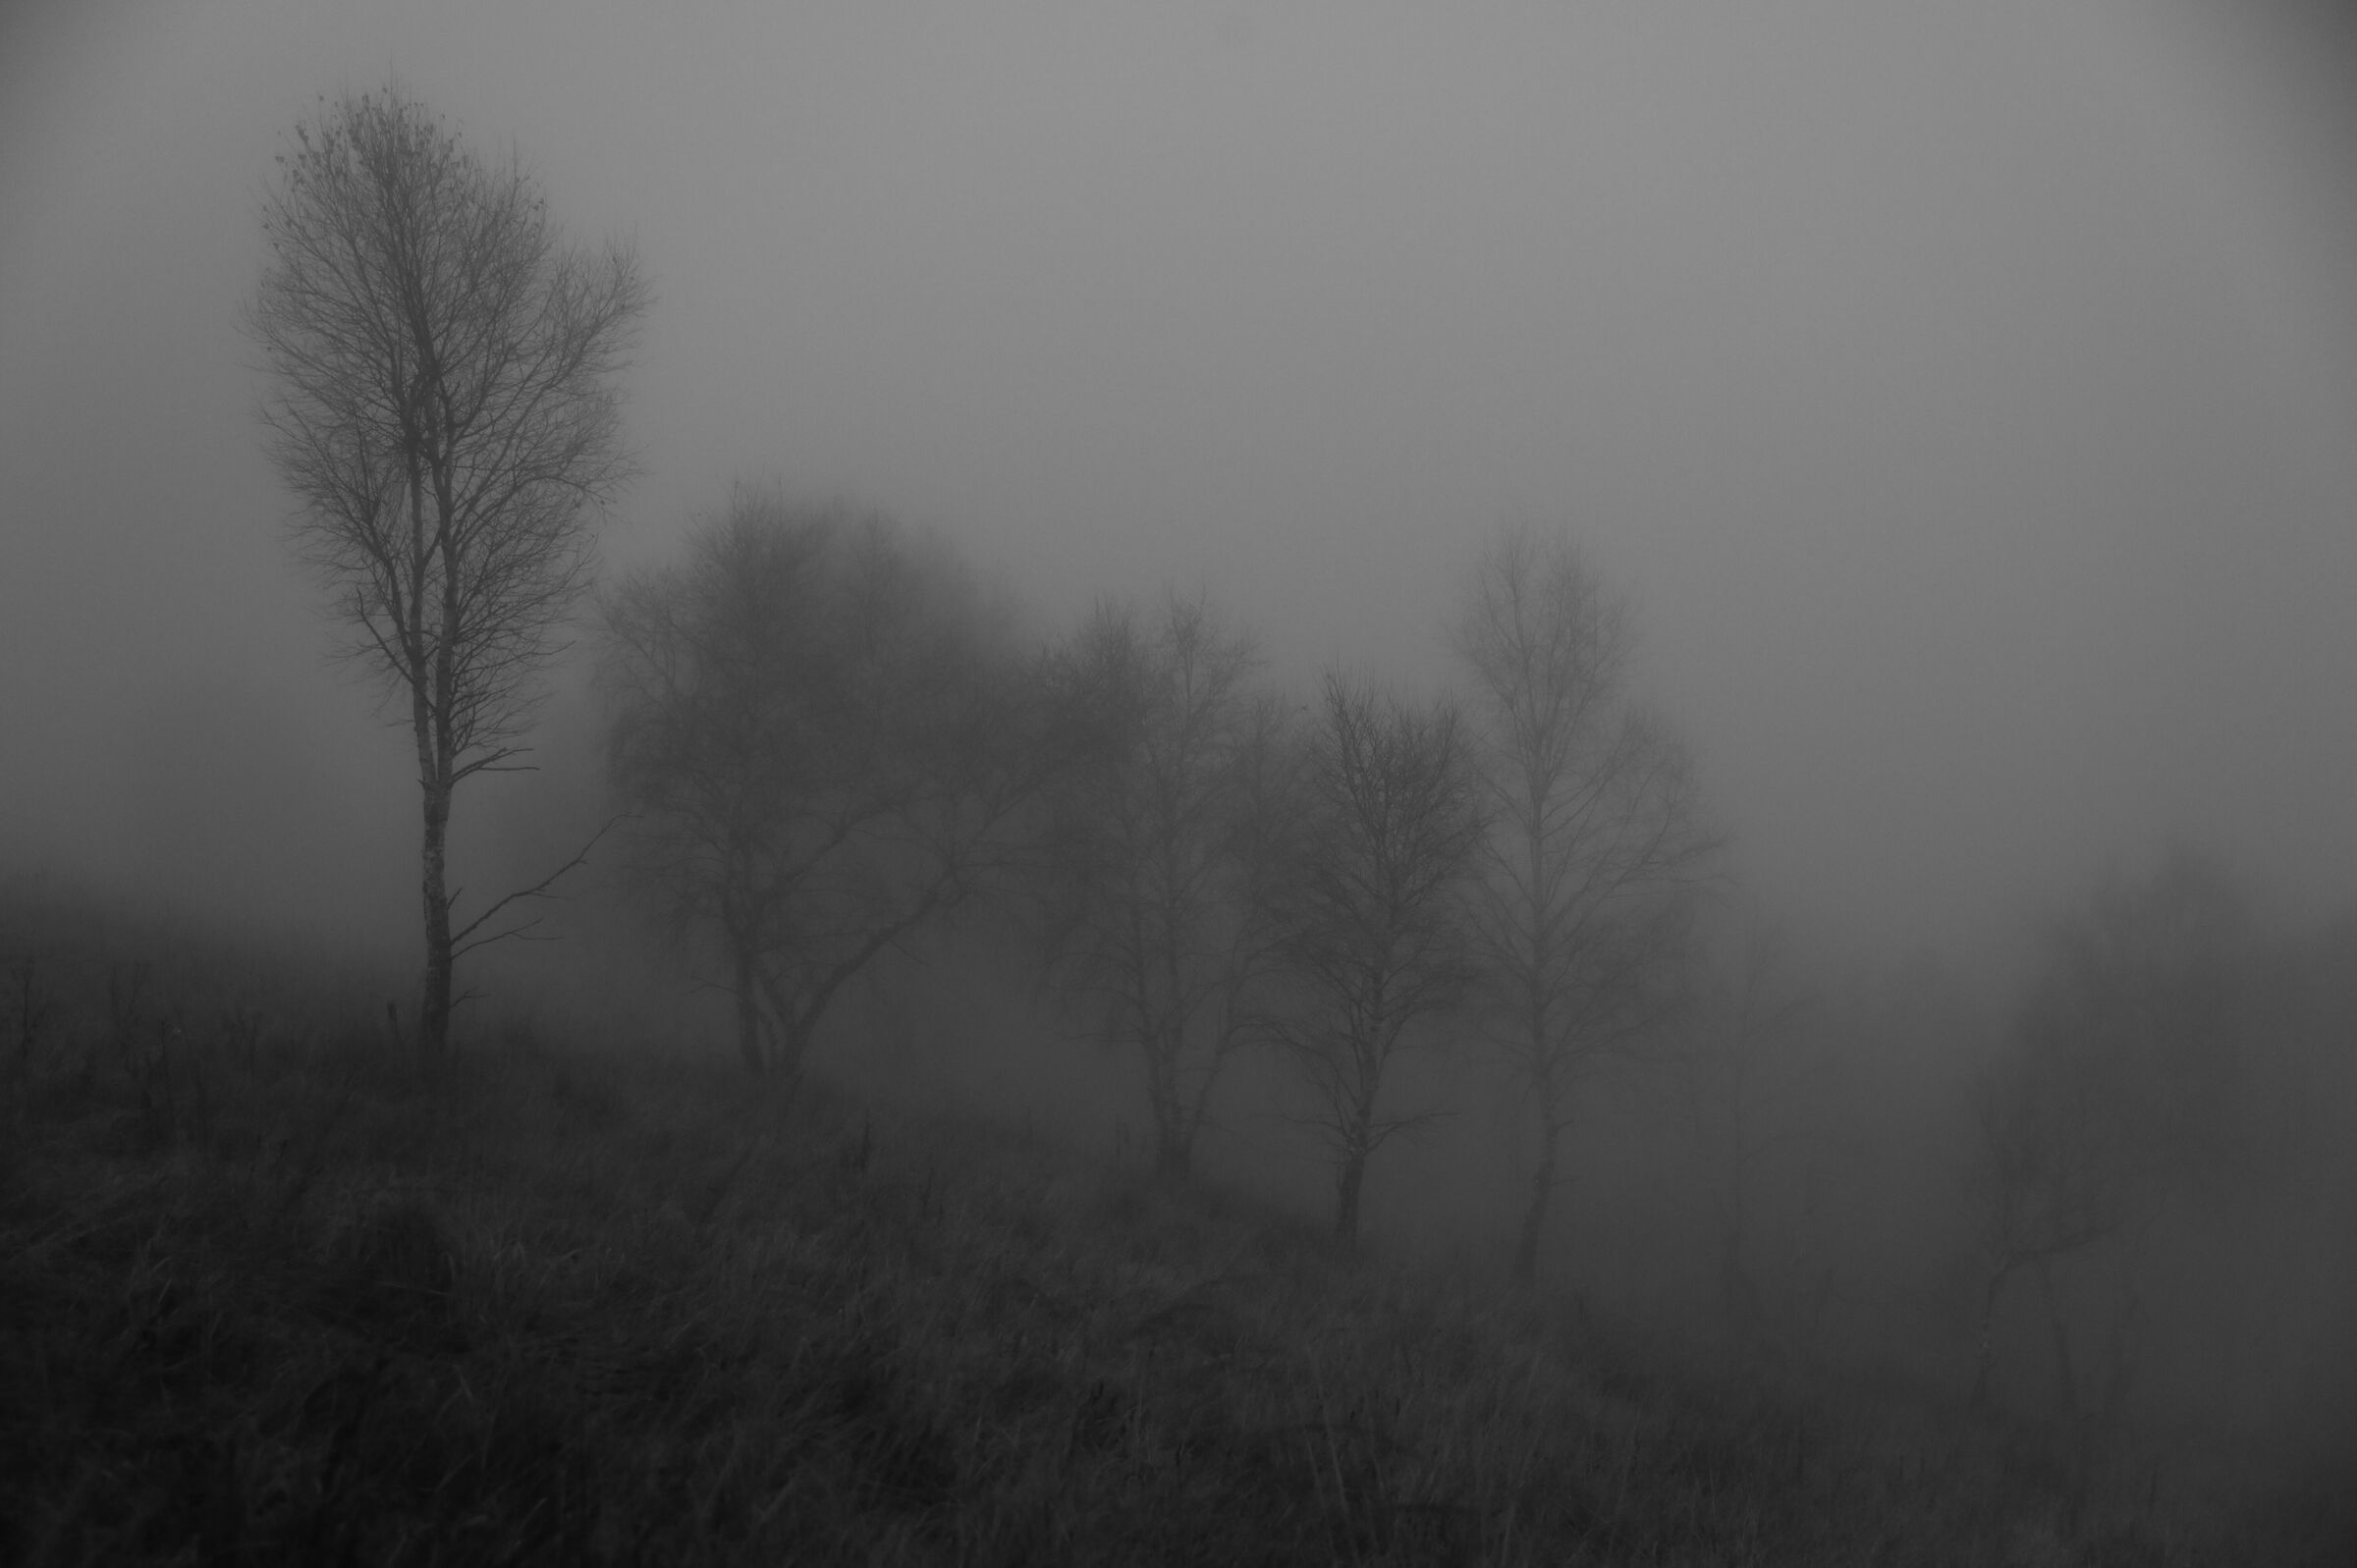 In the fog...